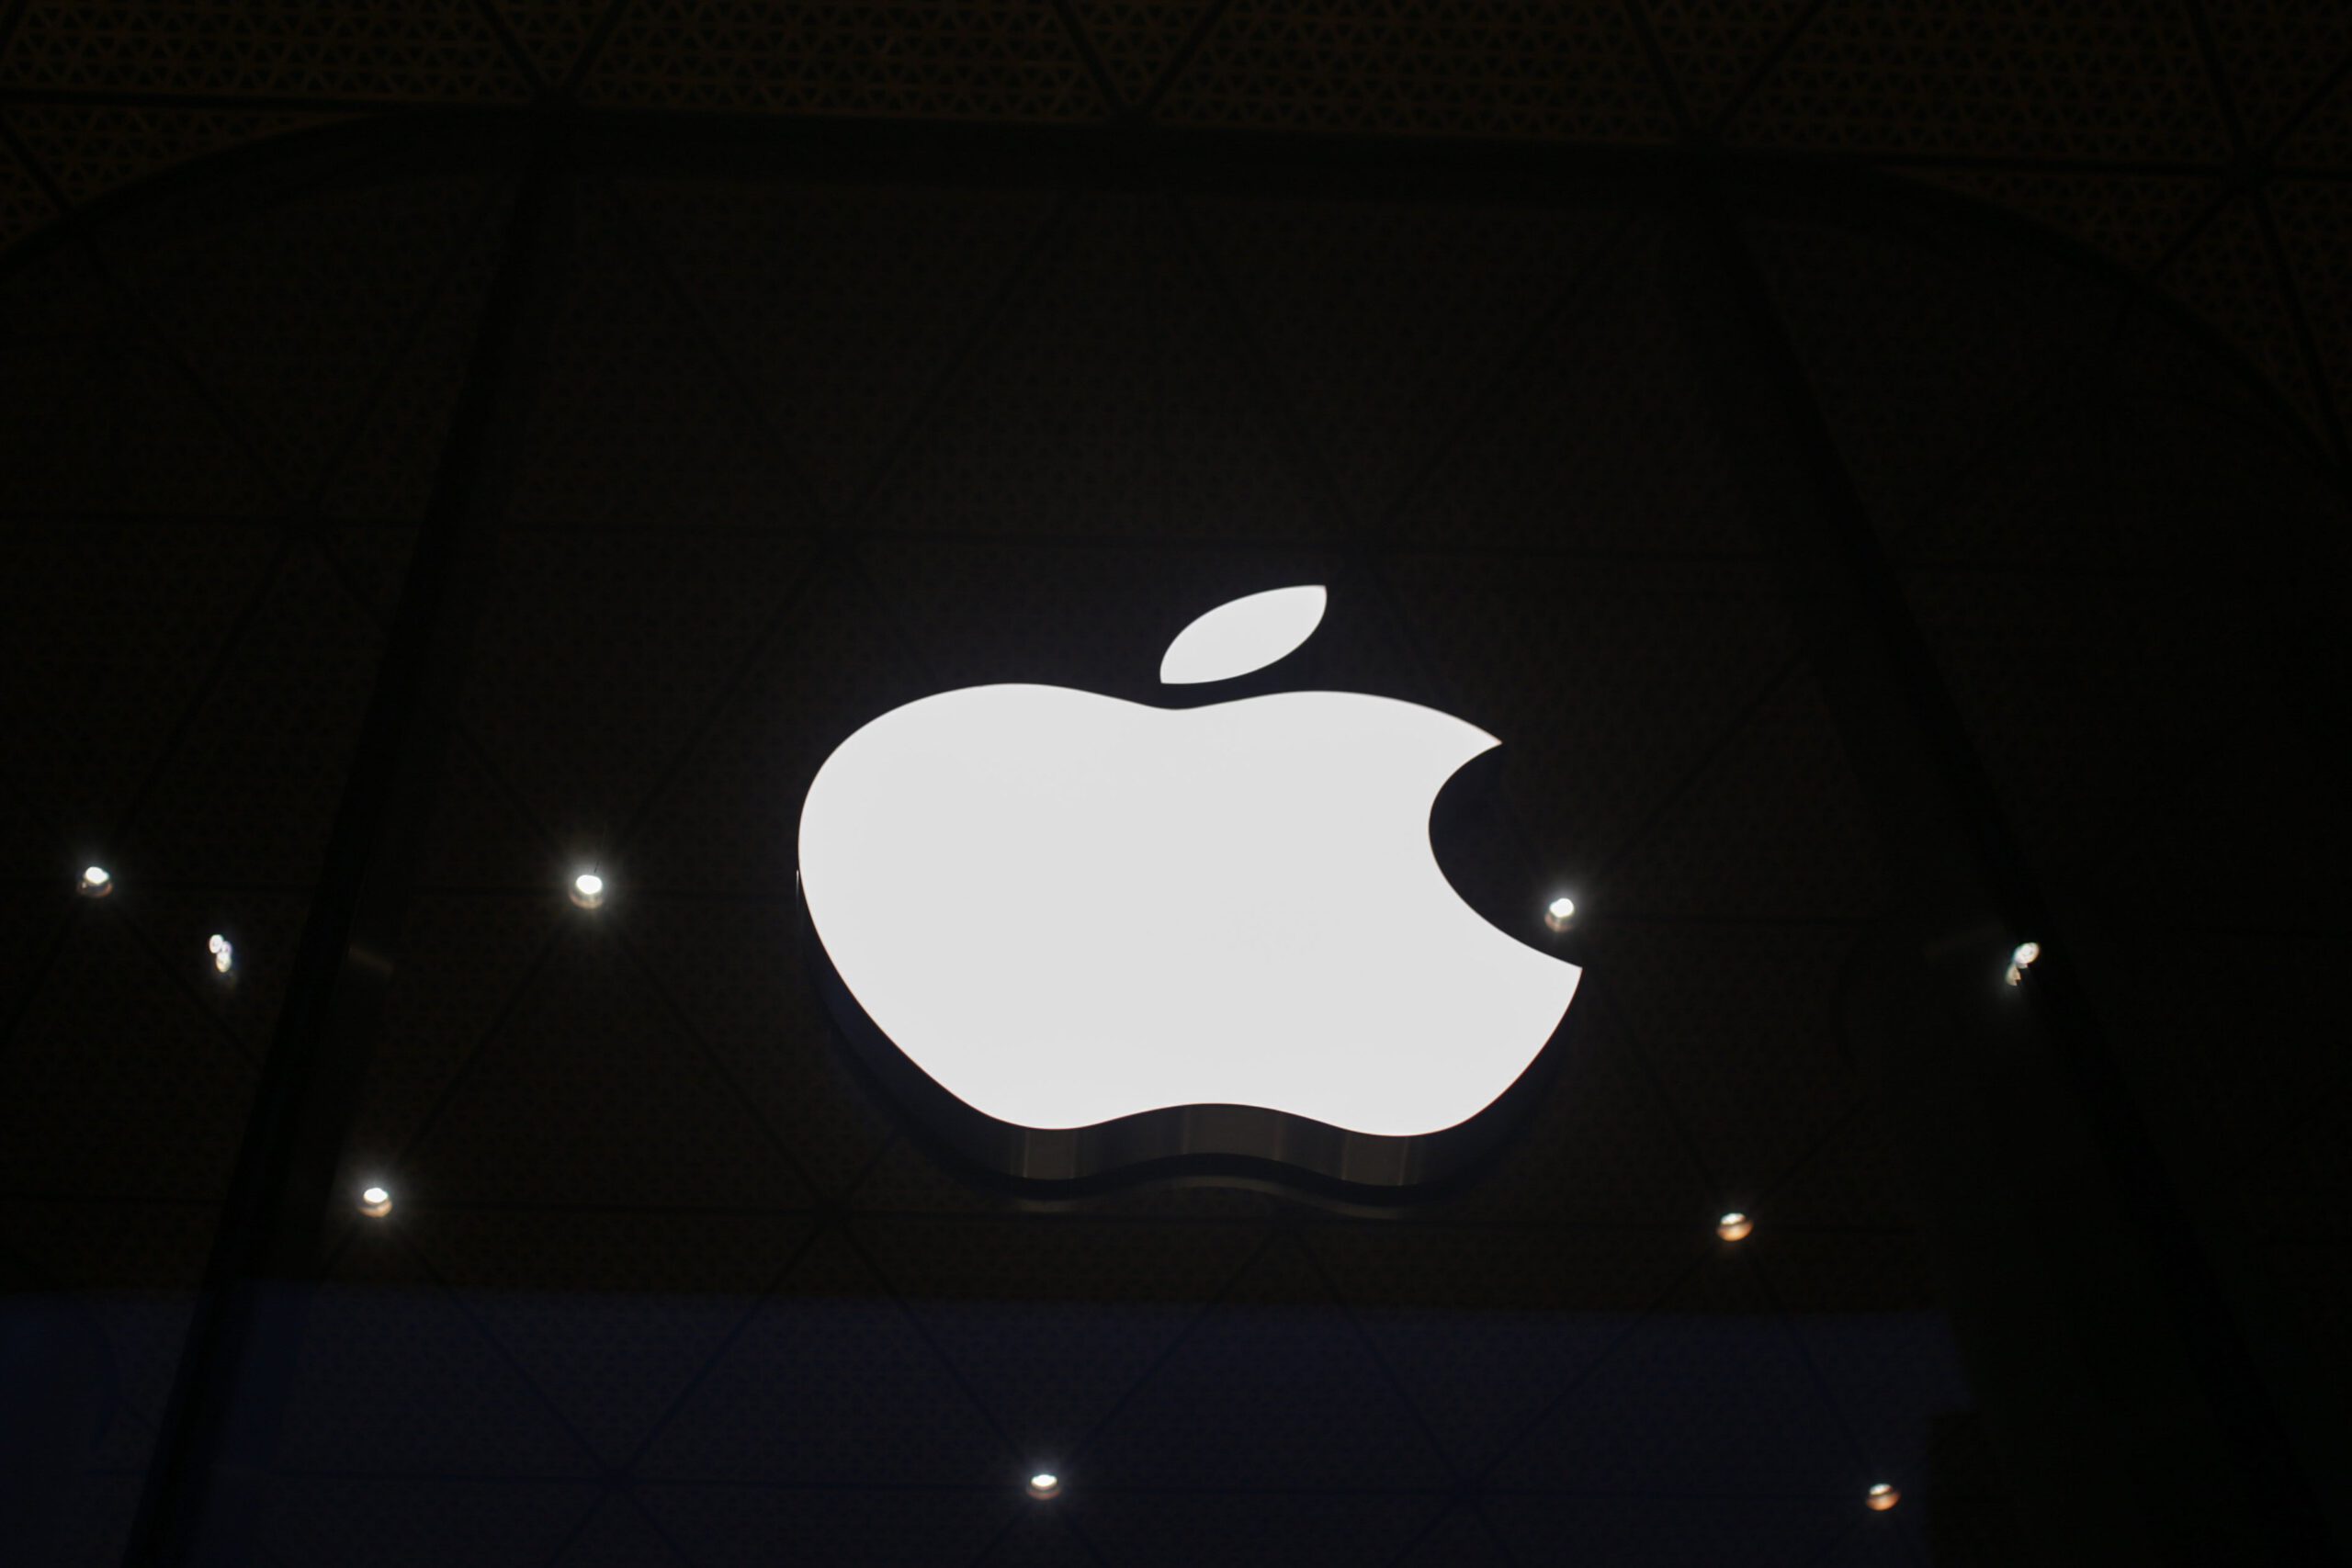 apple logo on black background